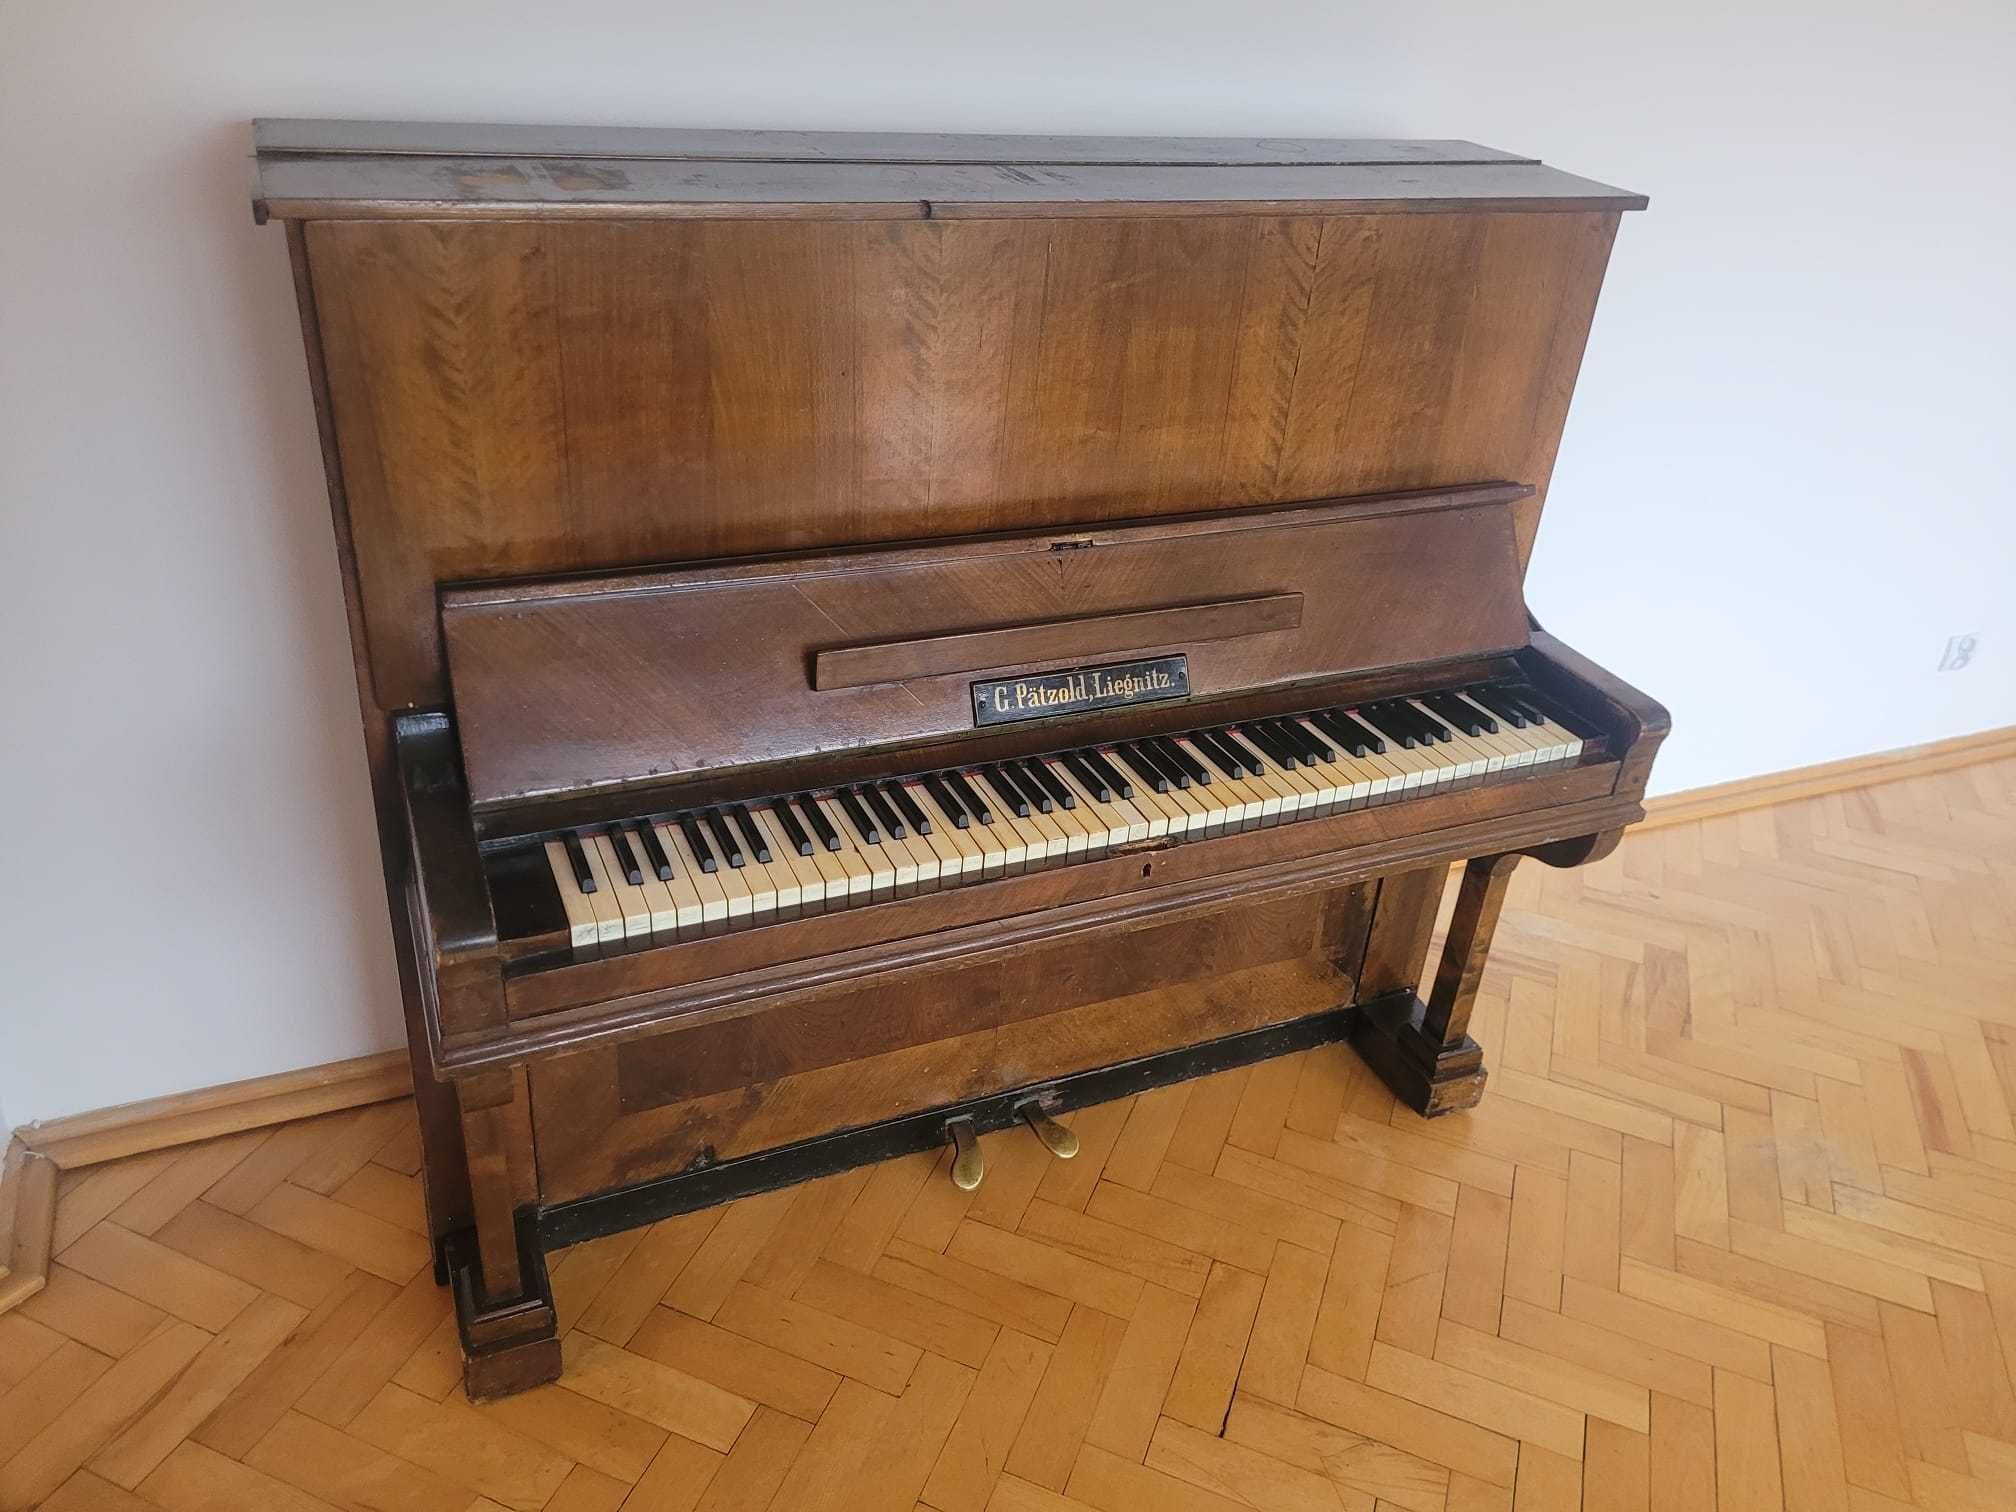 Pianino G. Pätzold, Liegnitz